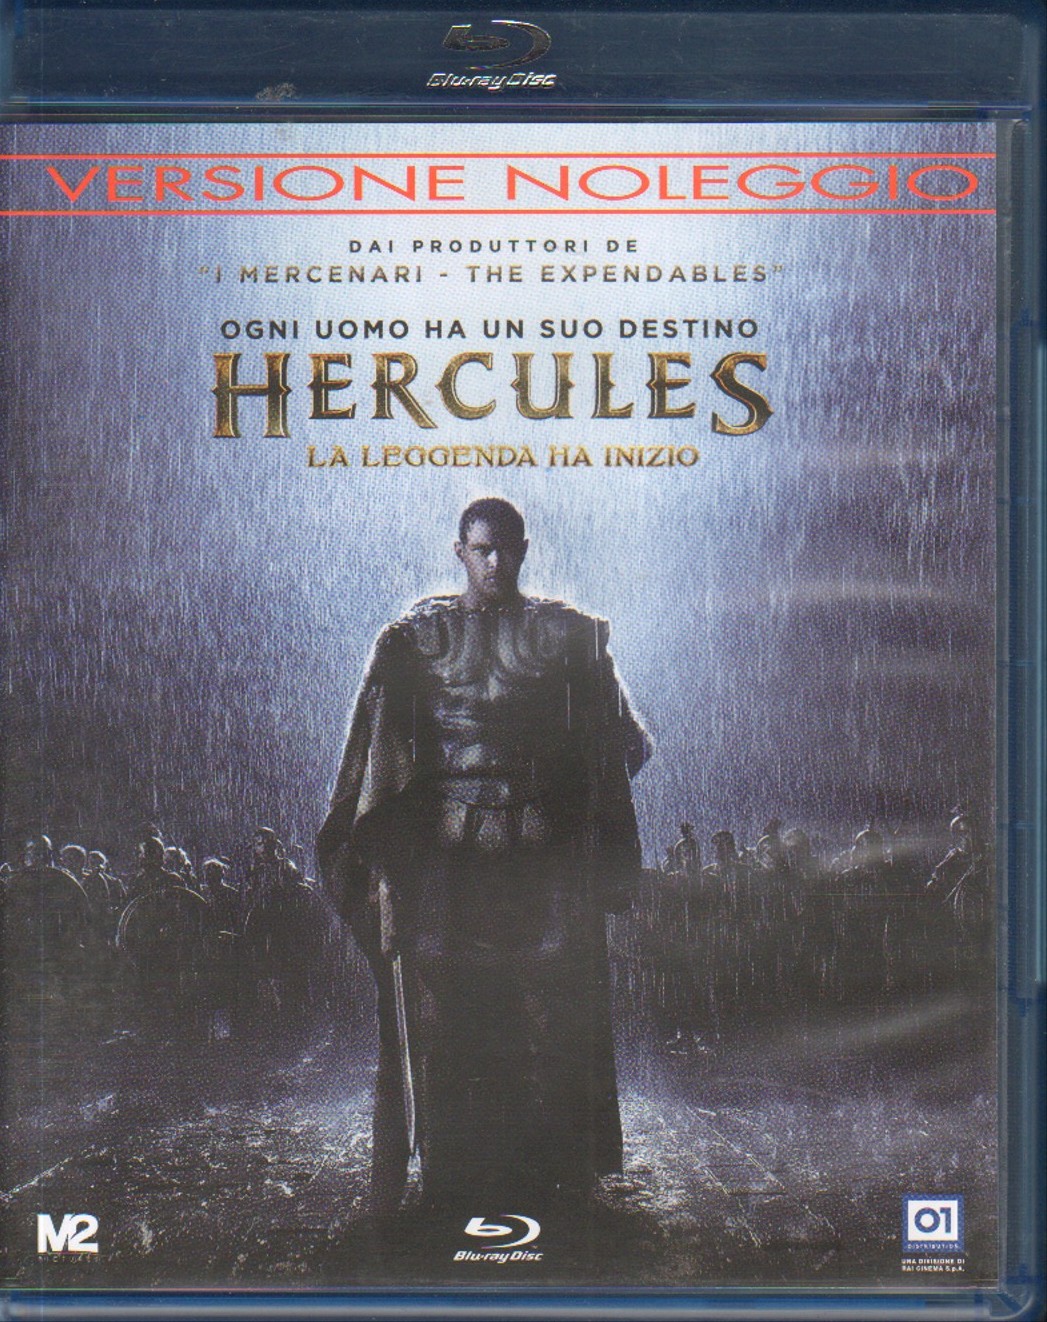 I Mercenari The Expendables 1+2+3, La trilogia 3 Blu-ray